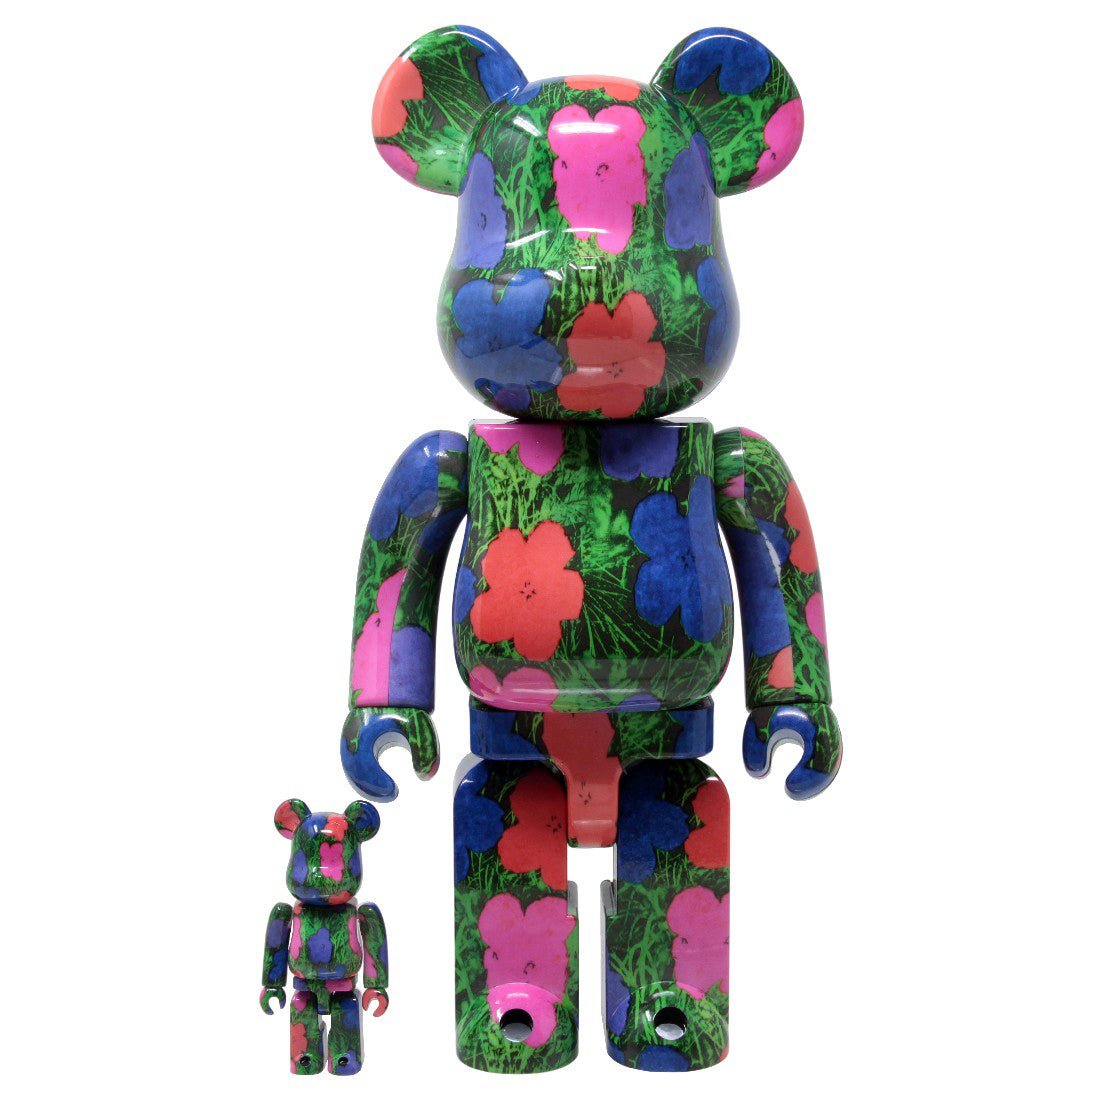 Bearbrick Medicom Toys for sale - Keith Haring v5 400% & 100 